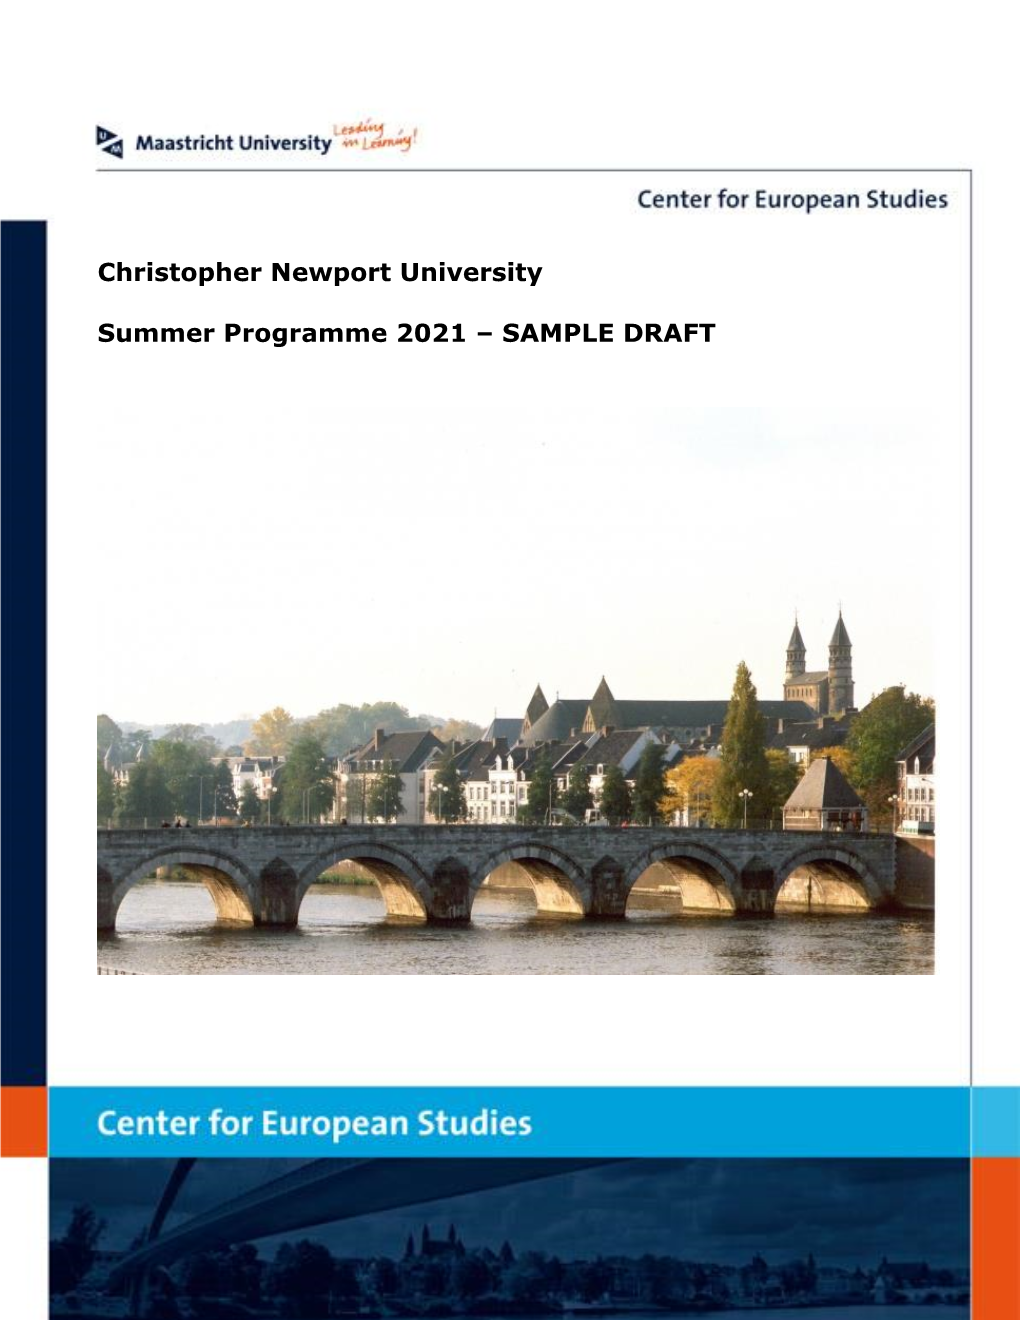 Christopher Newport University Summer Programme 2021